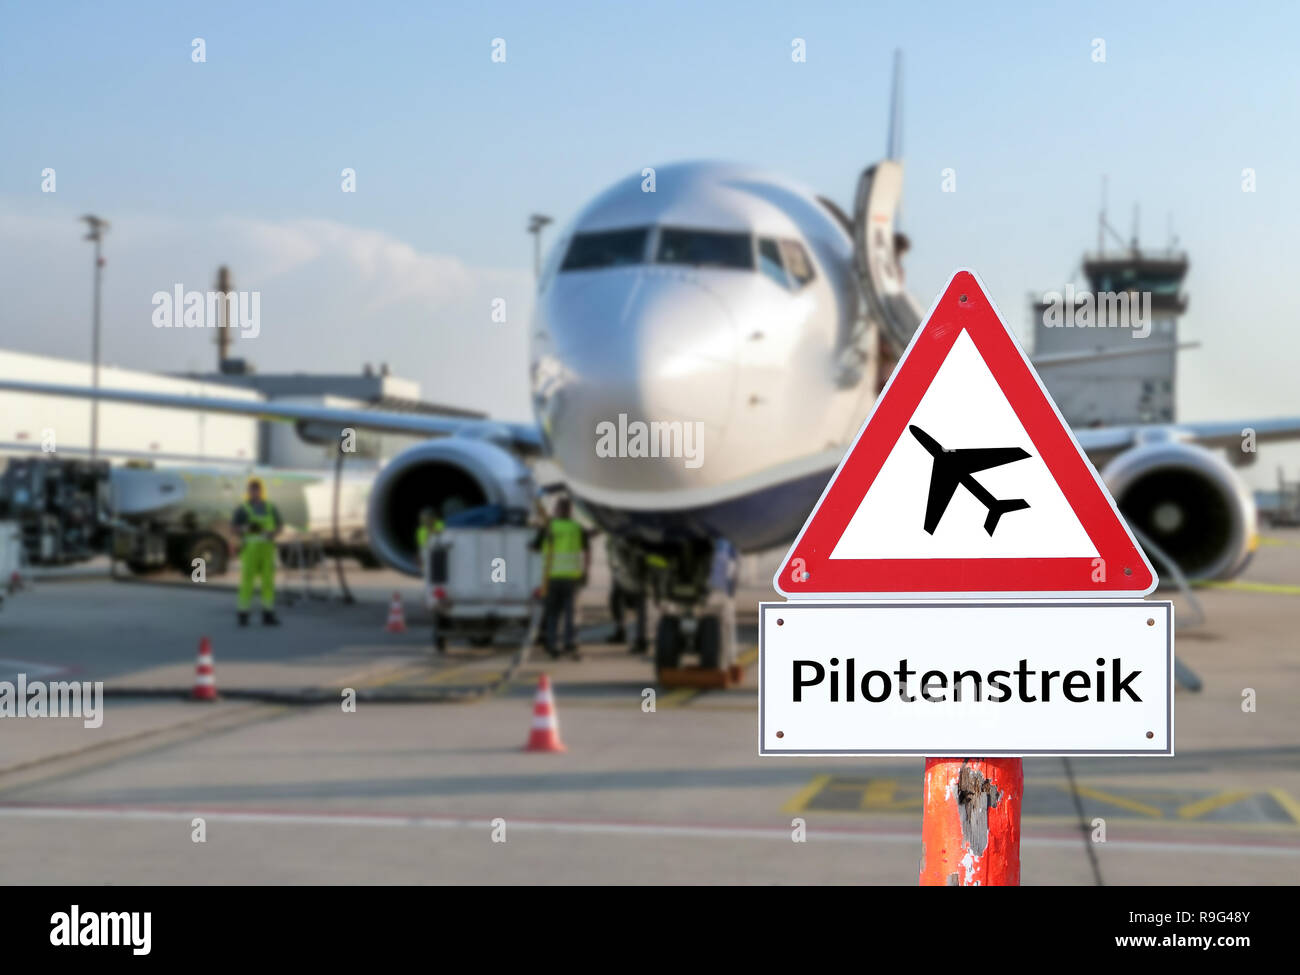 pilots' strike Germany sign Stock Photo